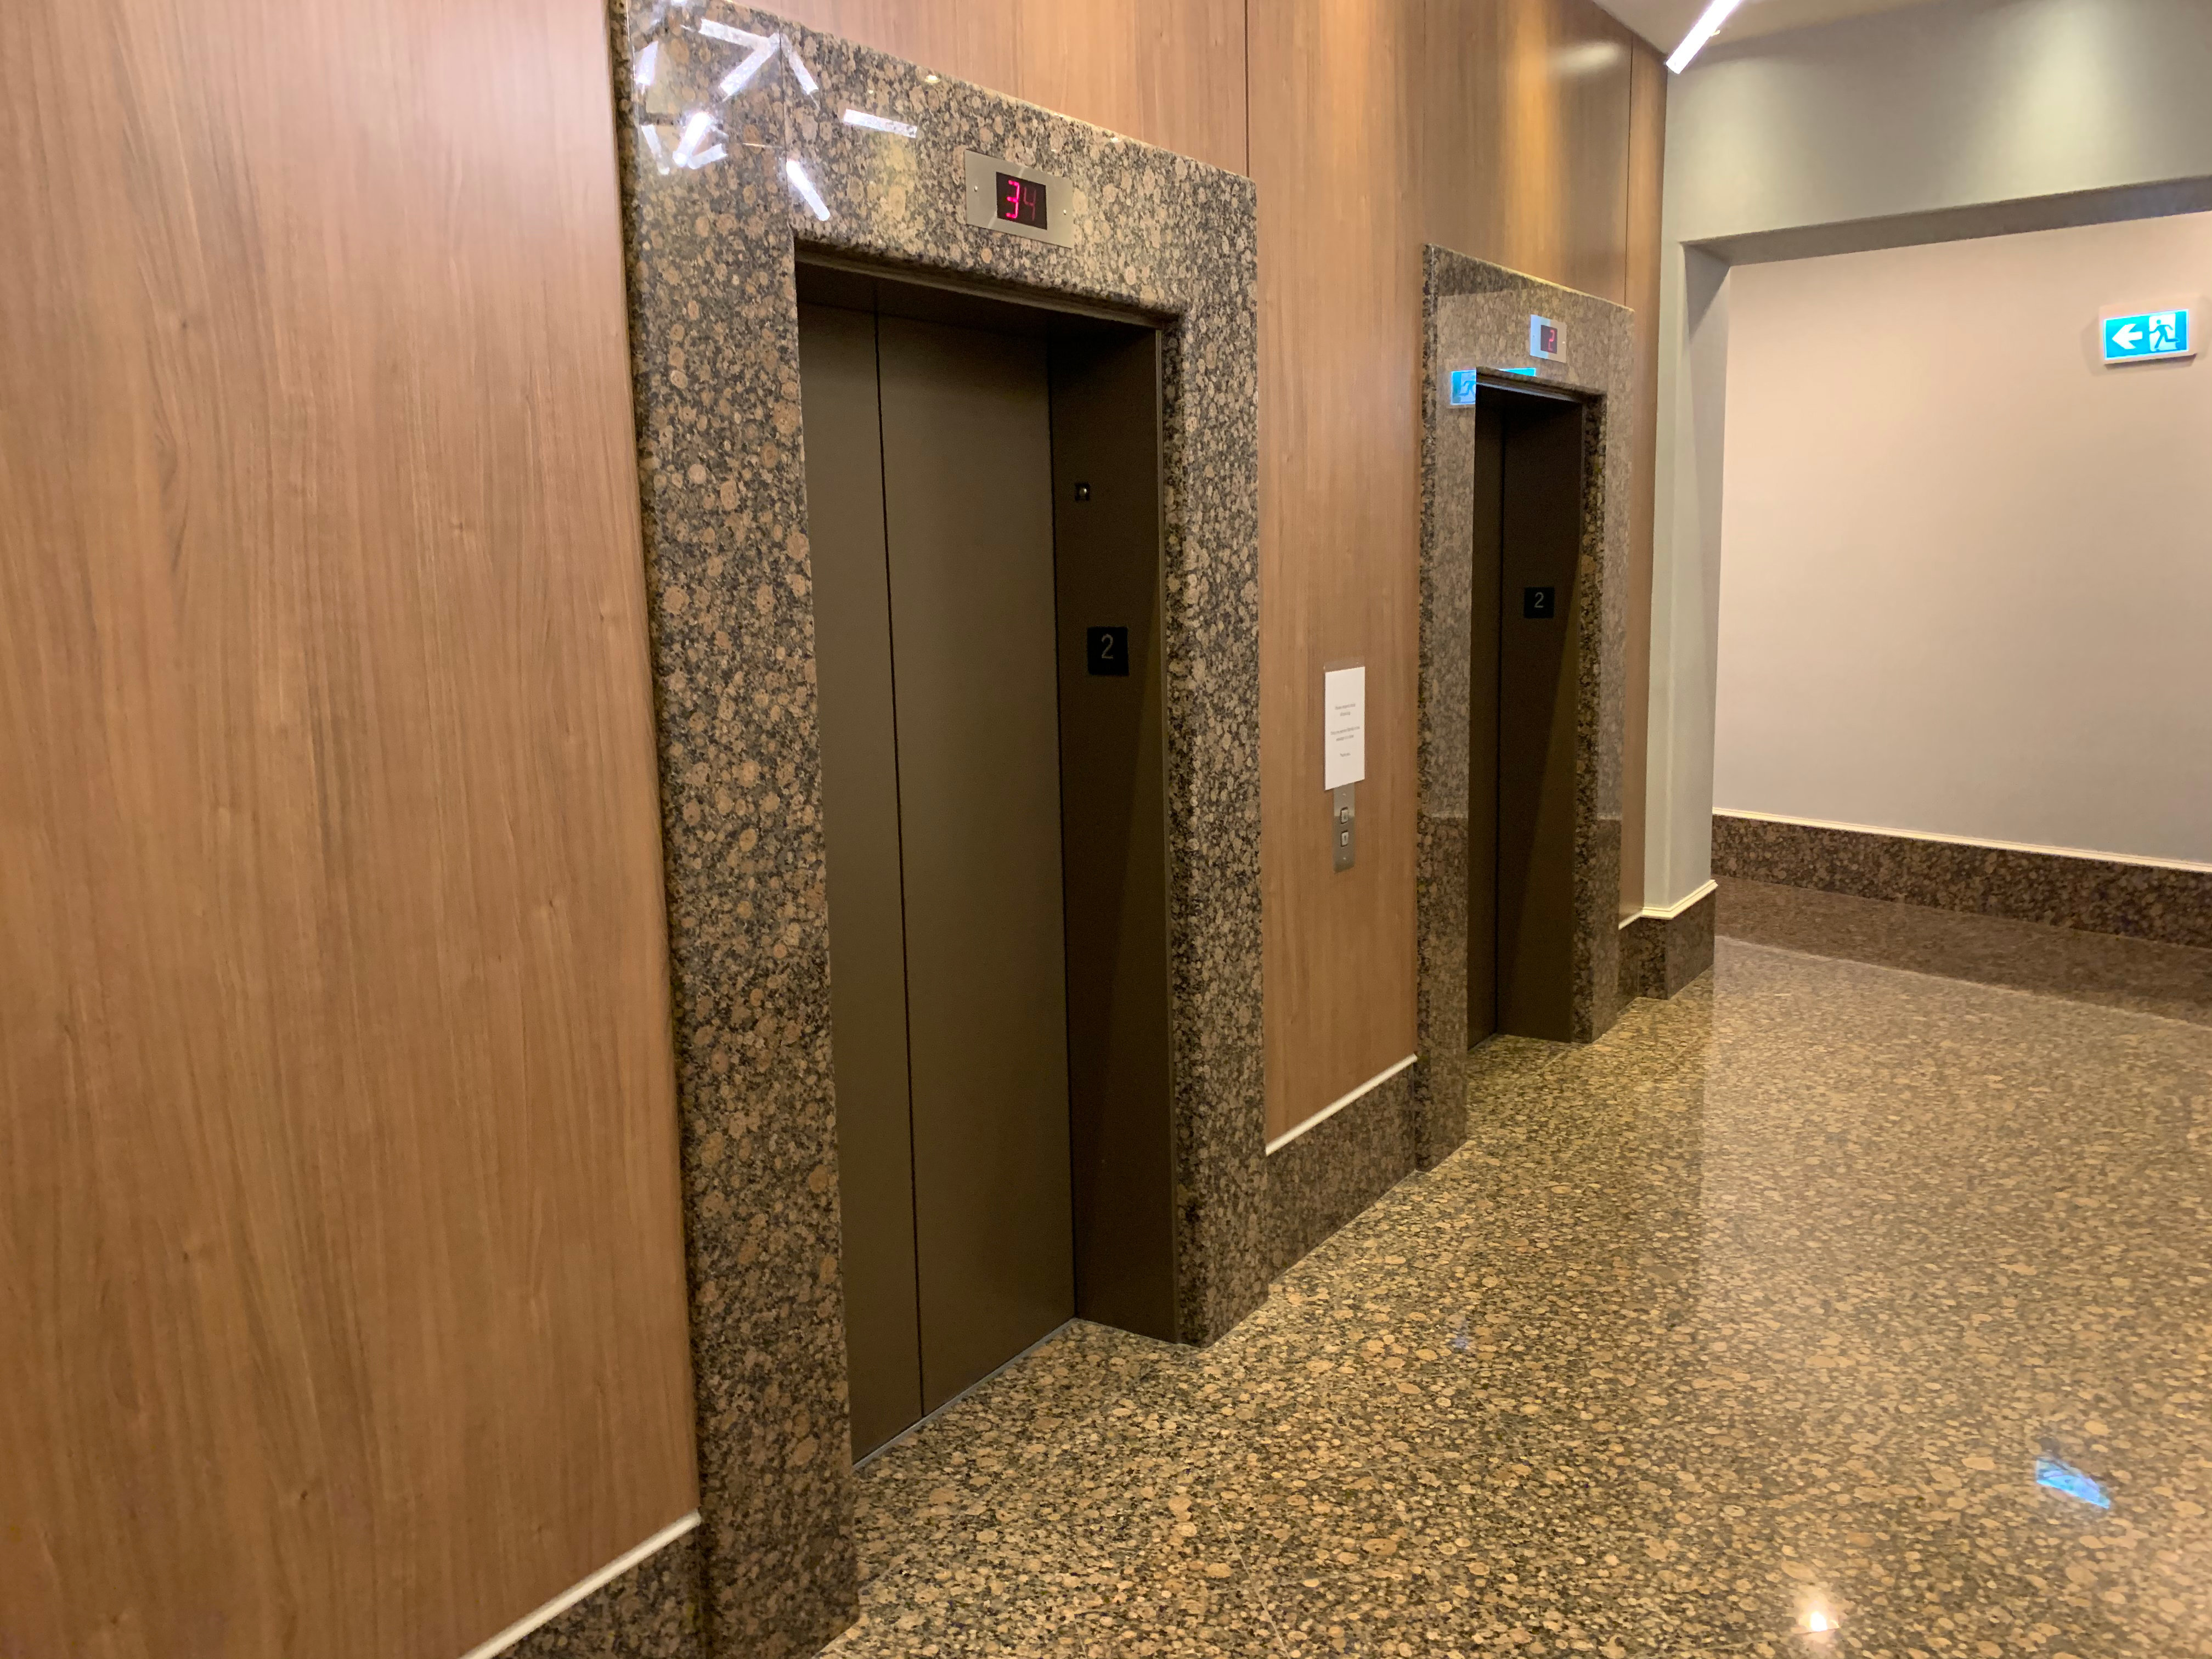 The Vantage Elevators!